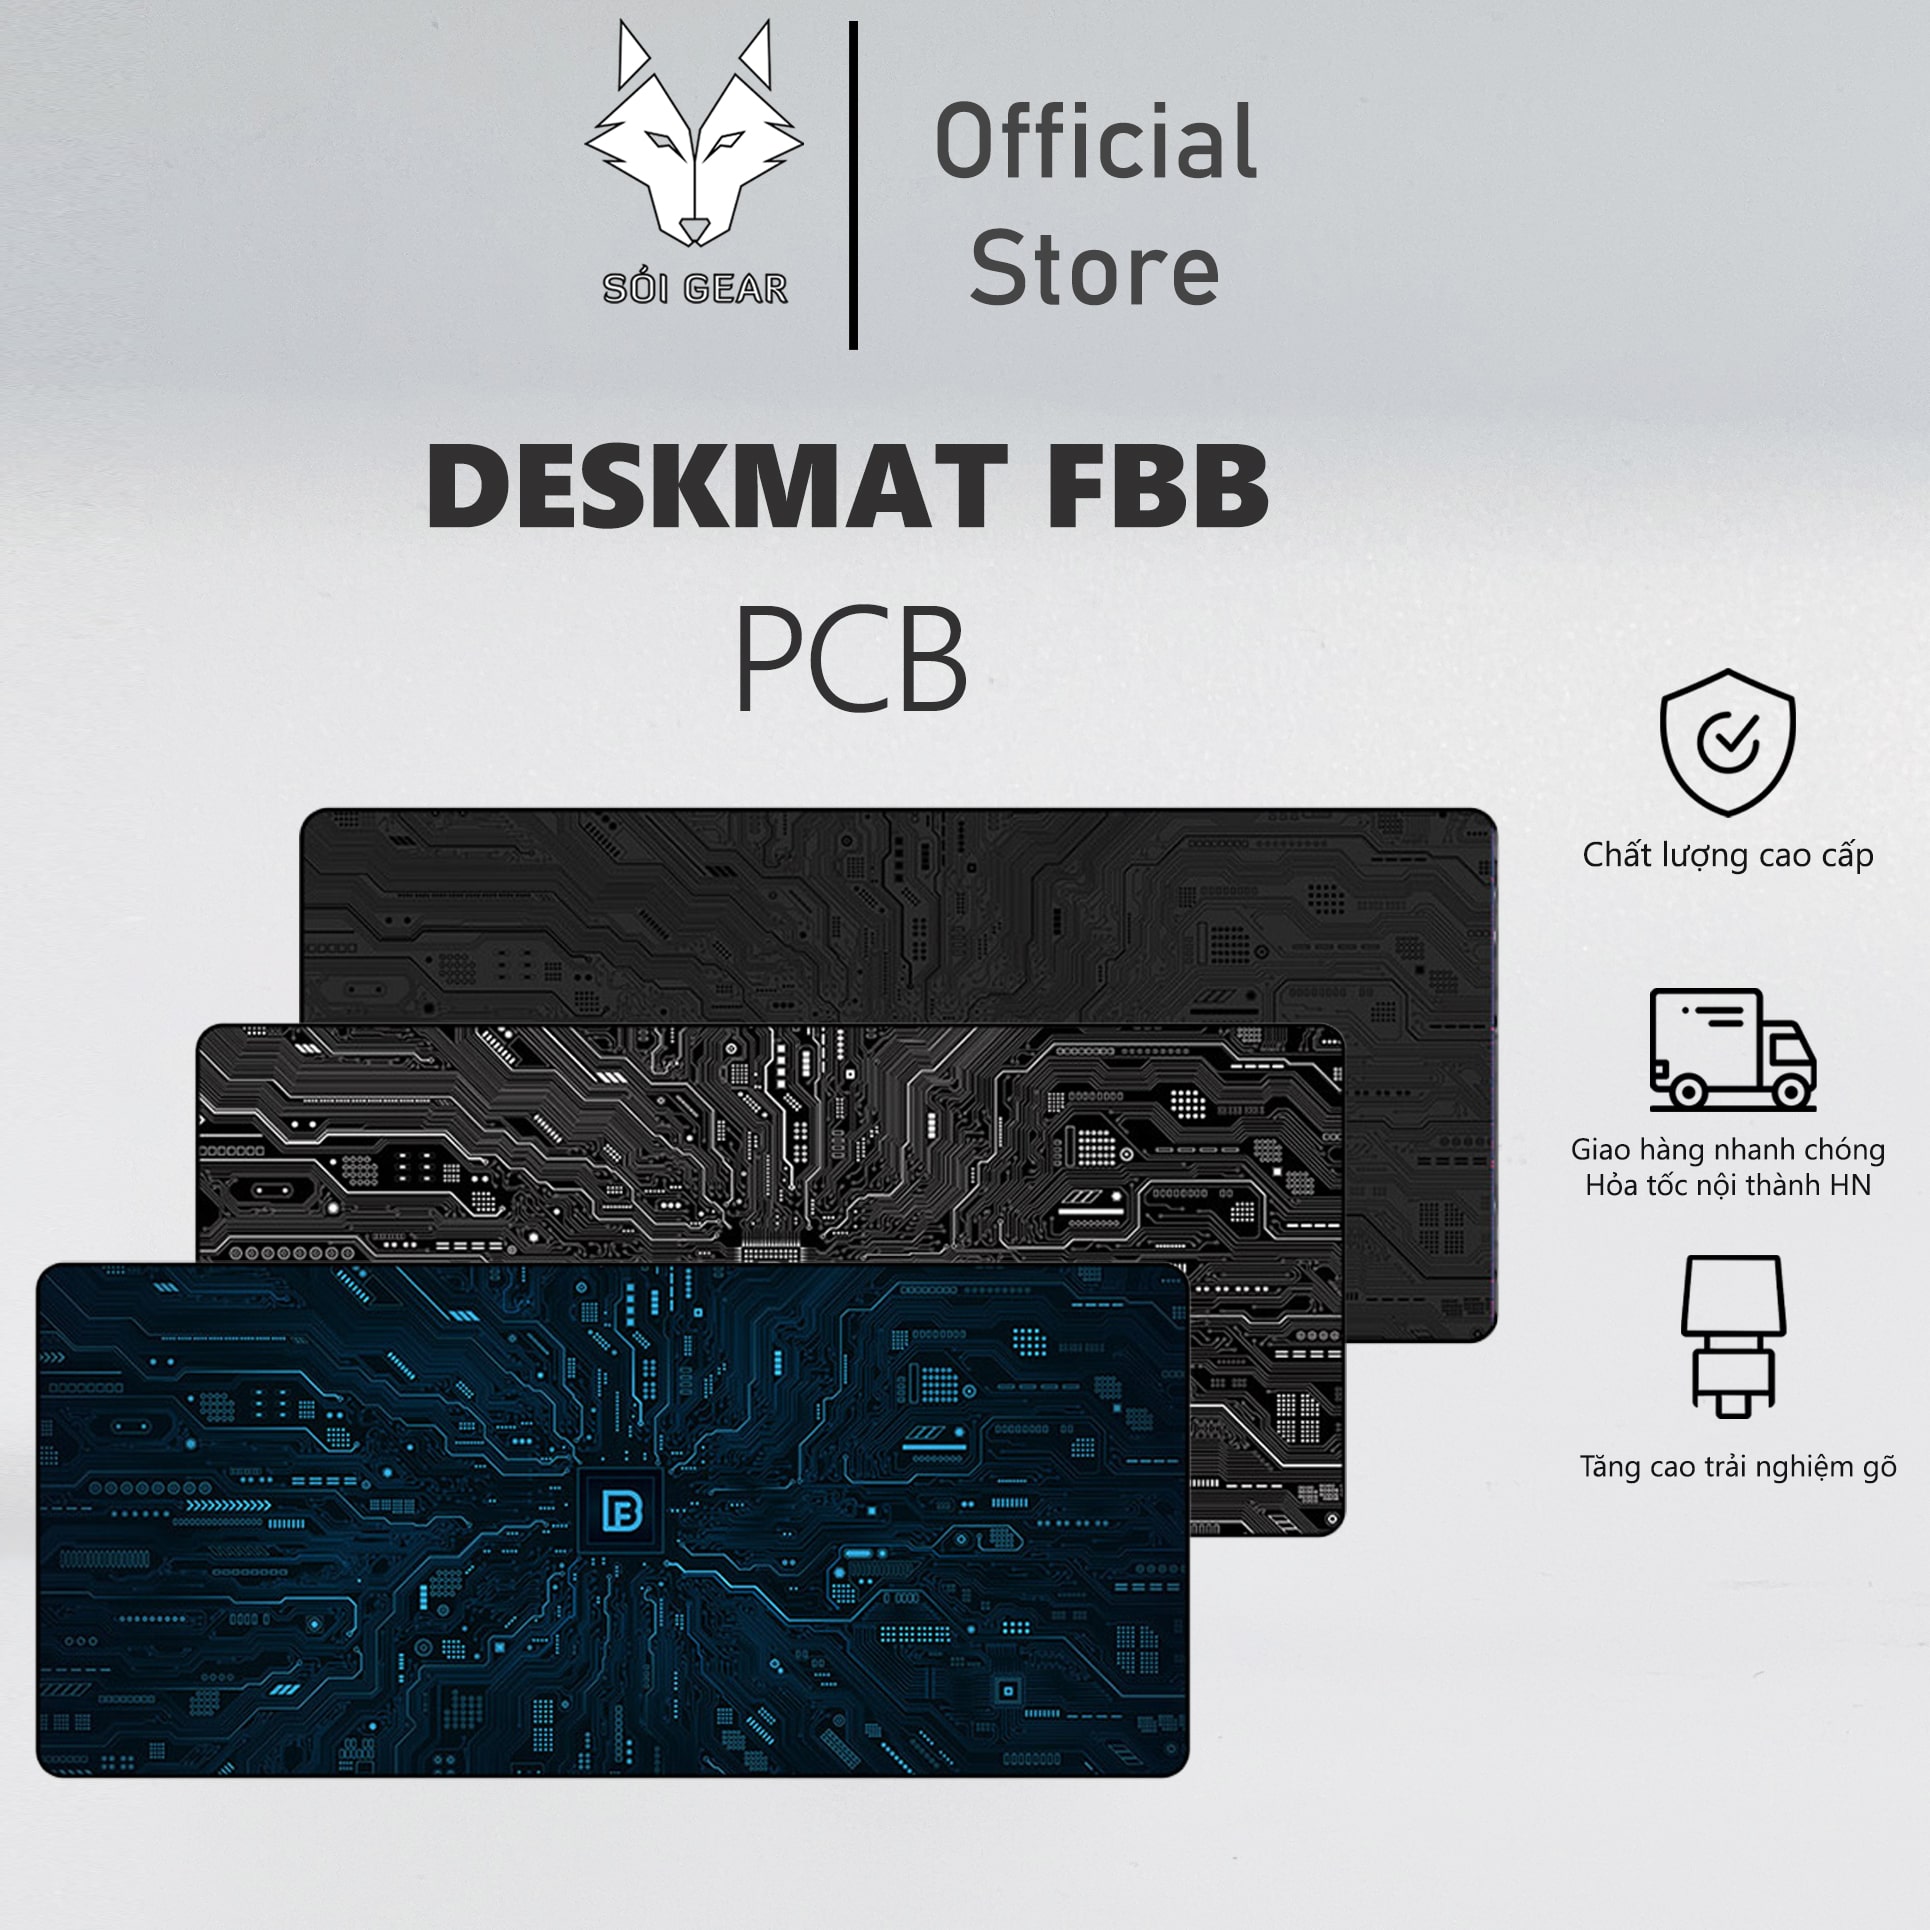 Deskmat FBB PCB